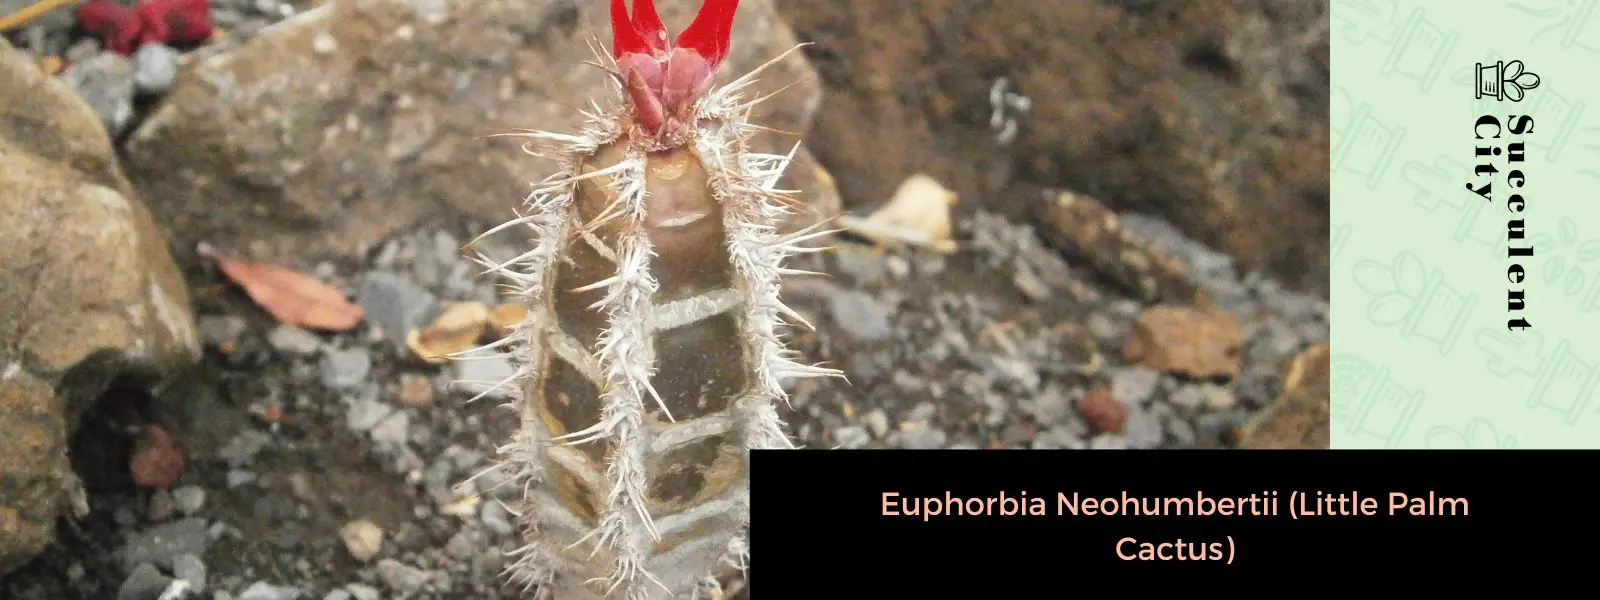 Euphorbia Neohumbertii (pequeño cactus de palma)